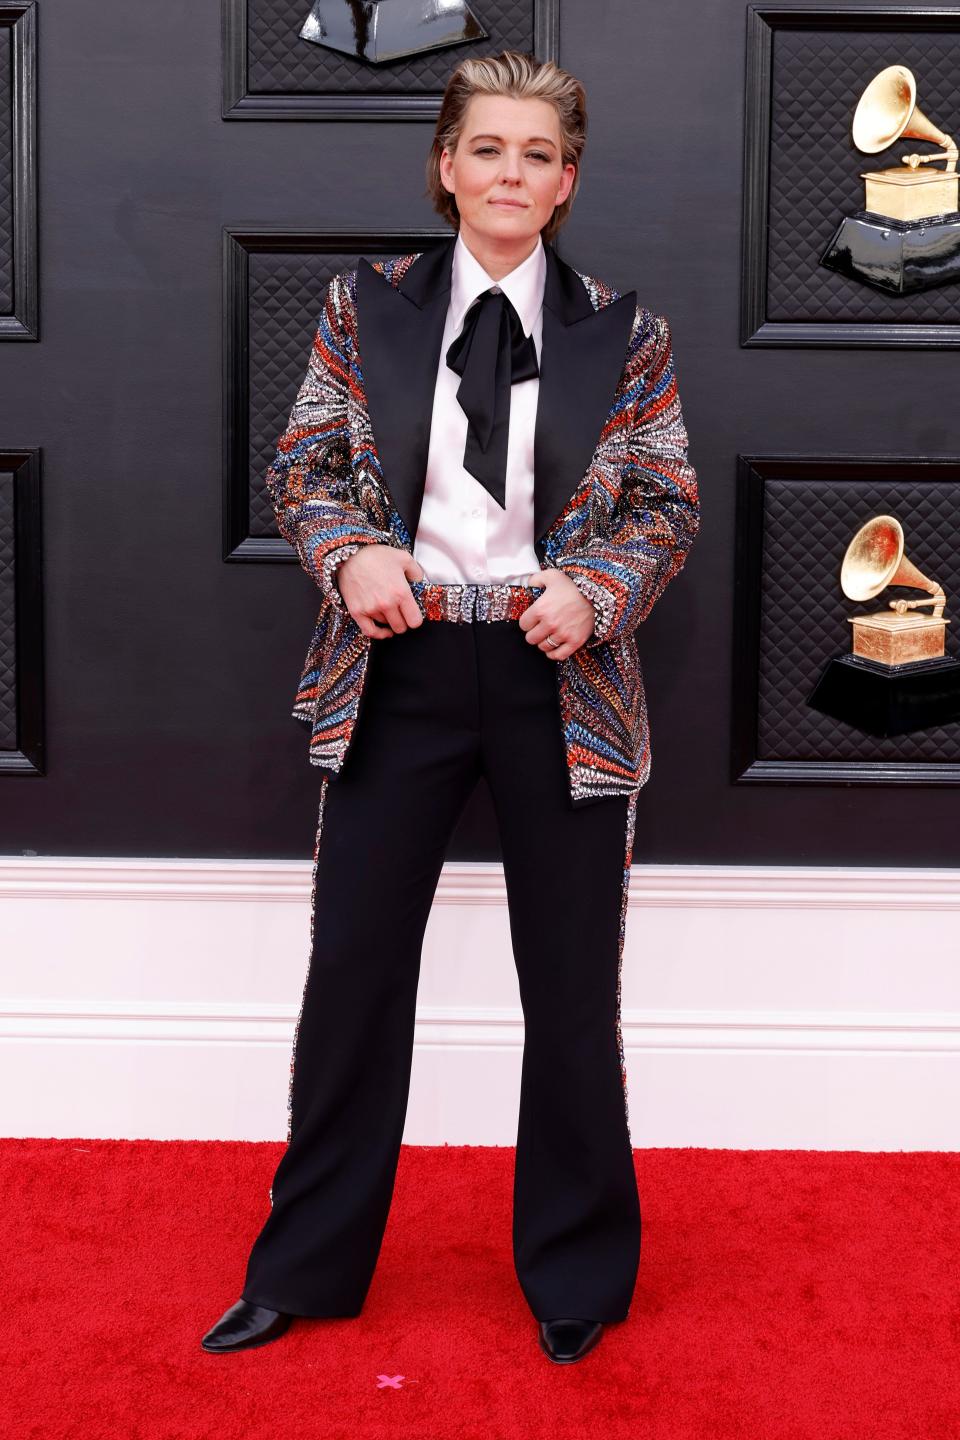 Brandi Carlile attends the 2022 Grammy Awards